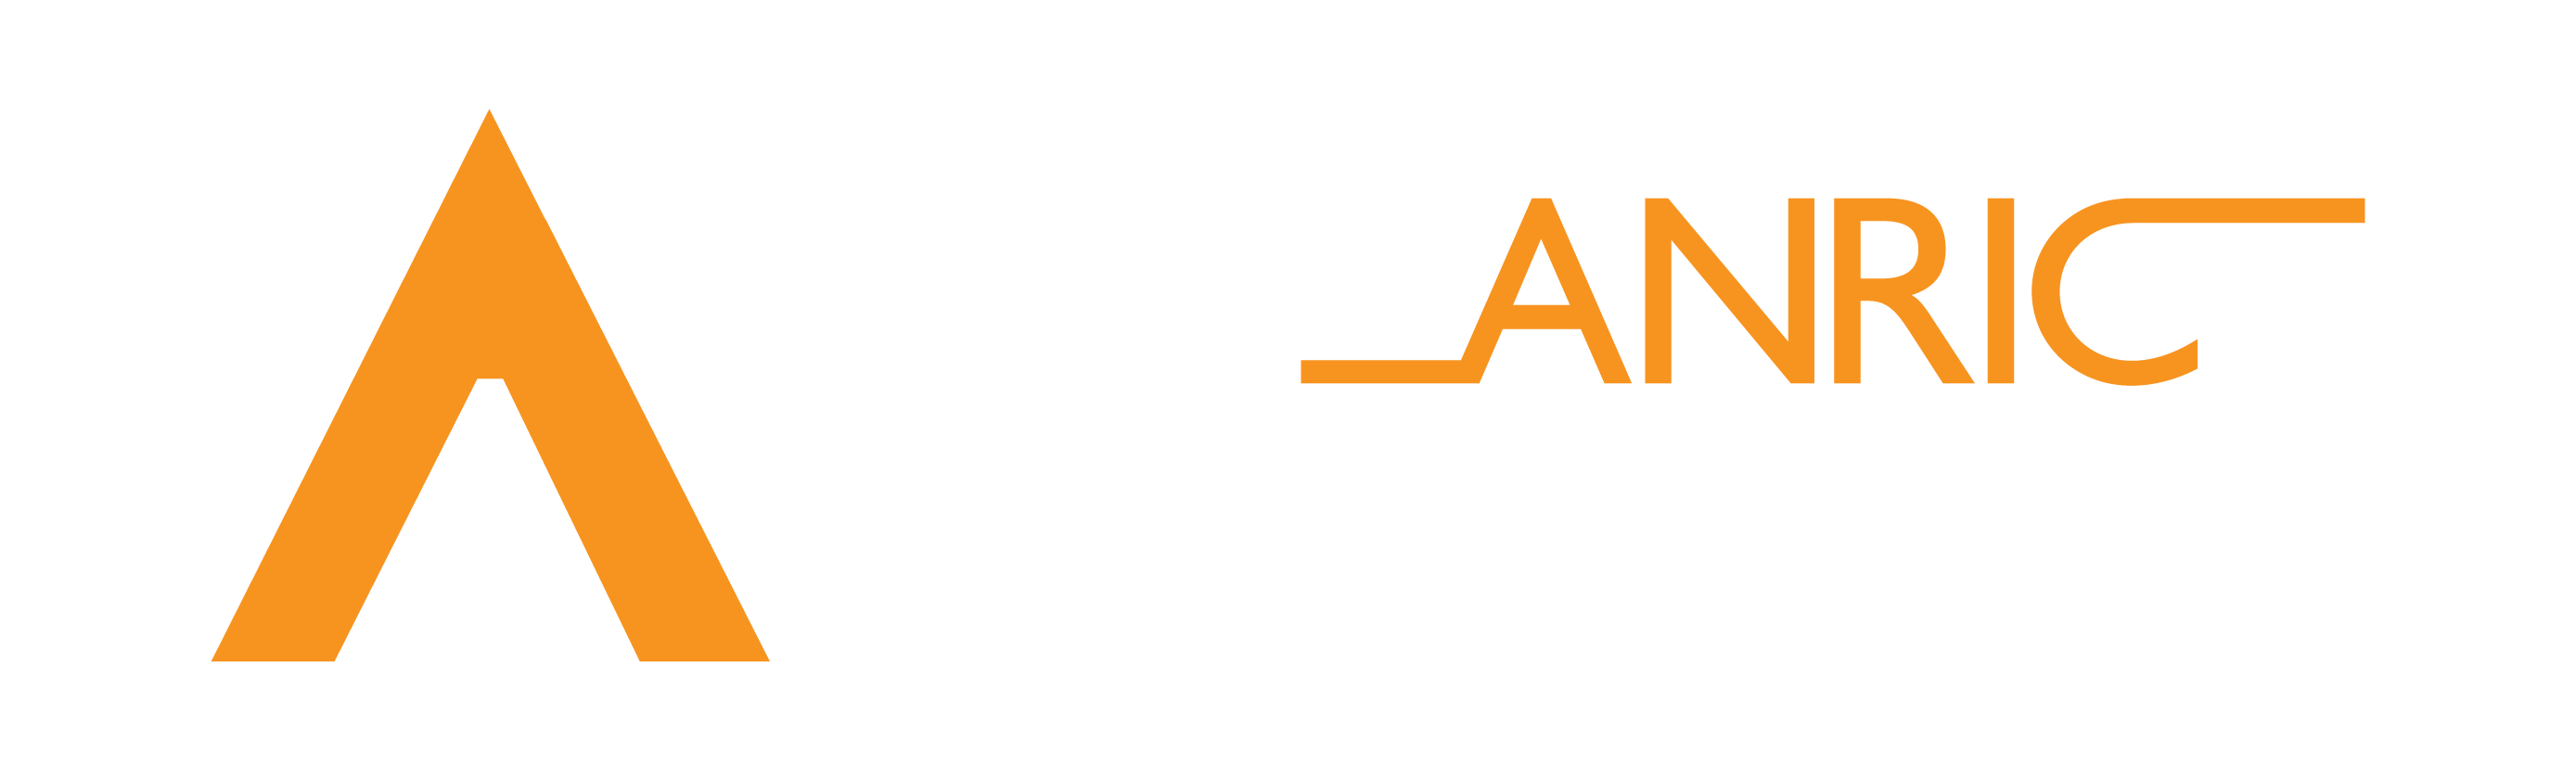 Anric Group Logo